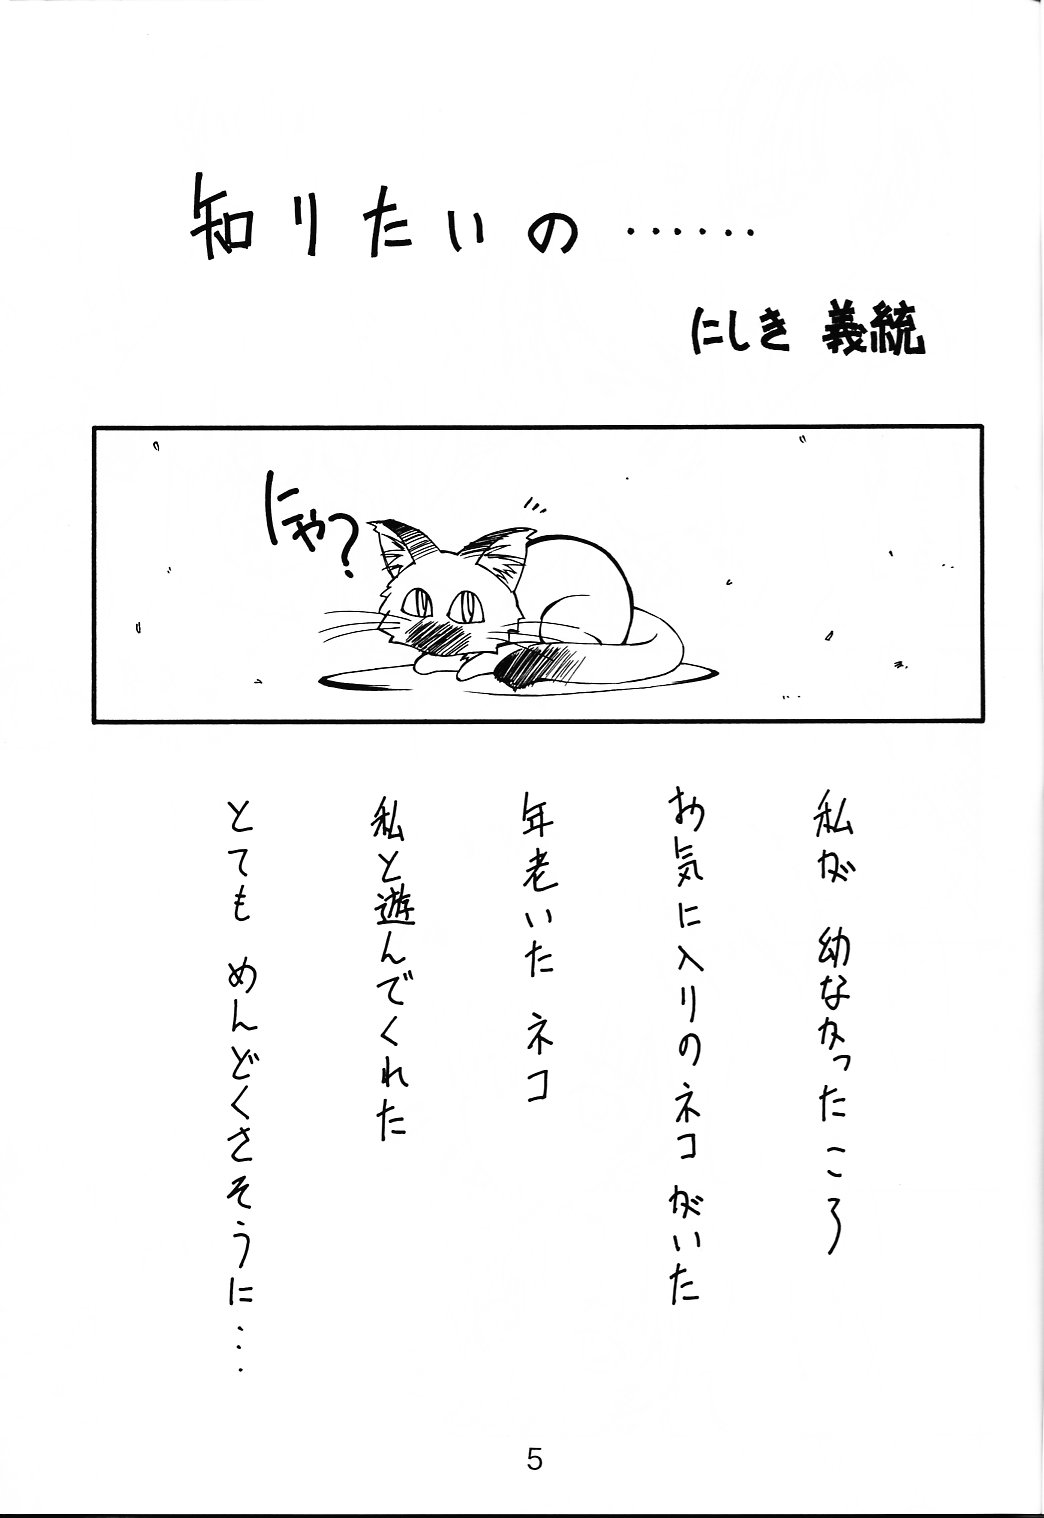 (C58) [Ikibata 49ers (Nishiki Yoshimune)] solitude solitaire 5 (Banner / Crest of the Stars) (C58) [いきばた４９ＥＲＳ (にしき義統)] solitude solitaire 5 (星界の紋章)